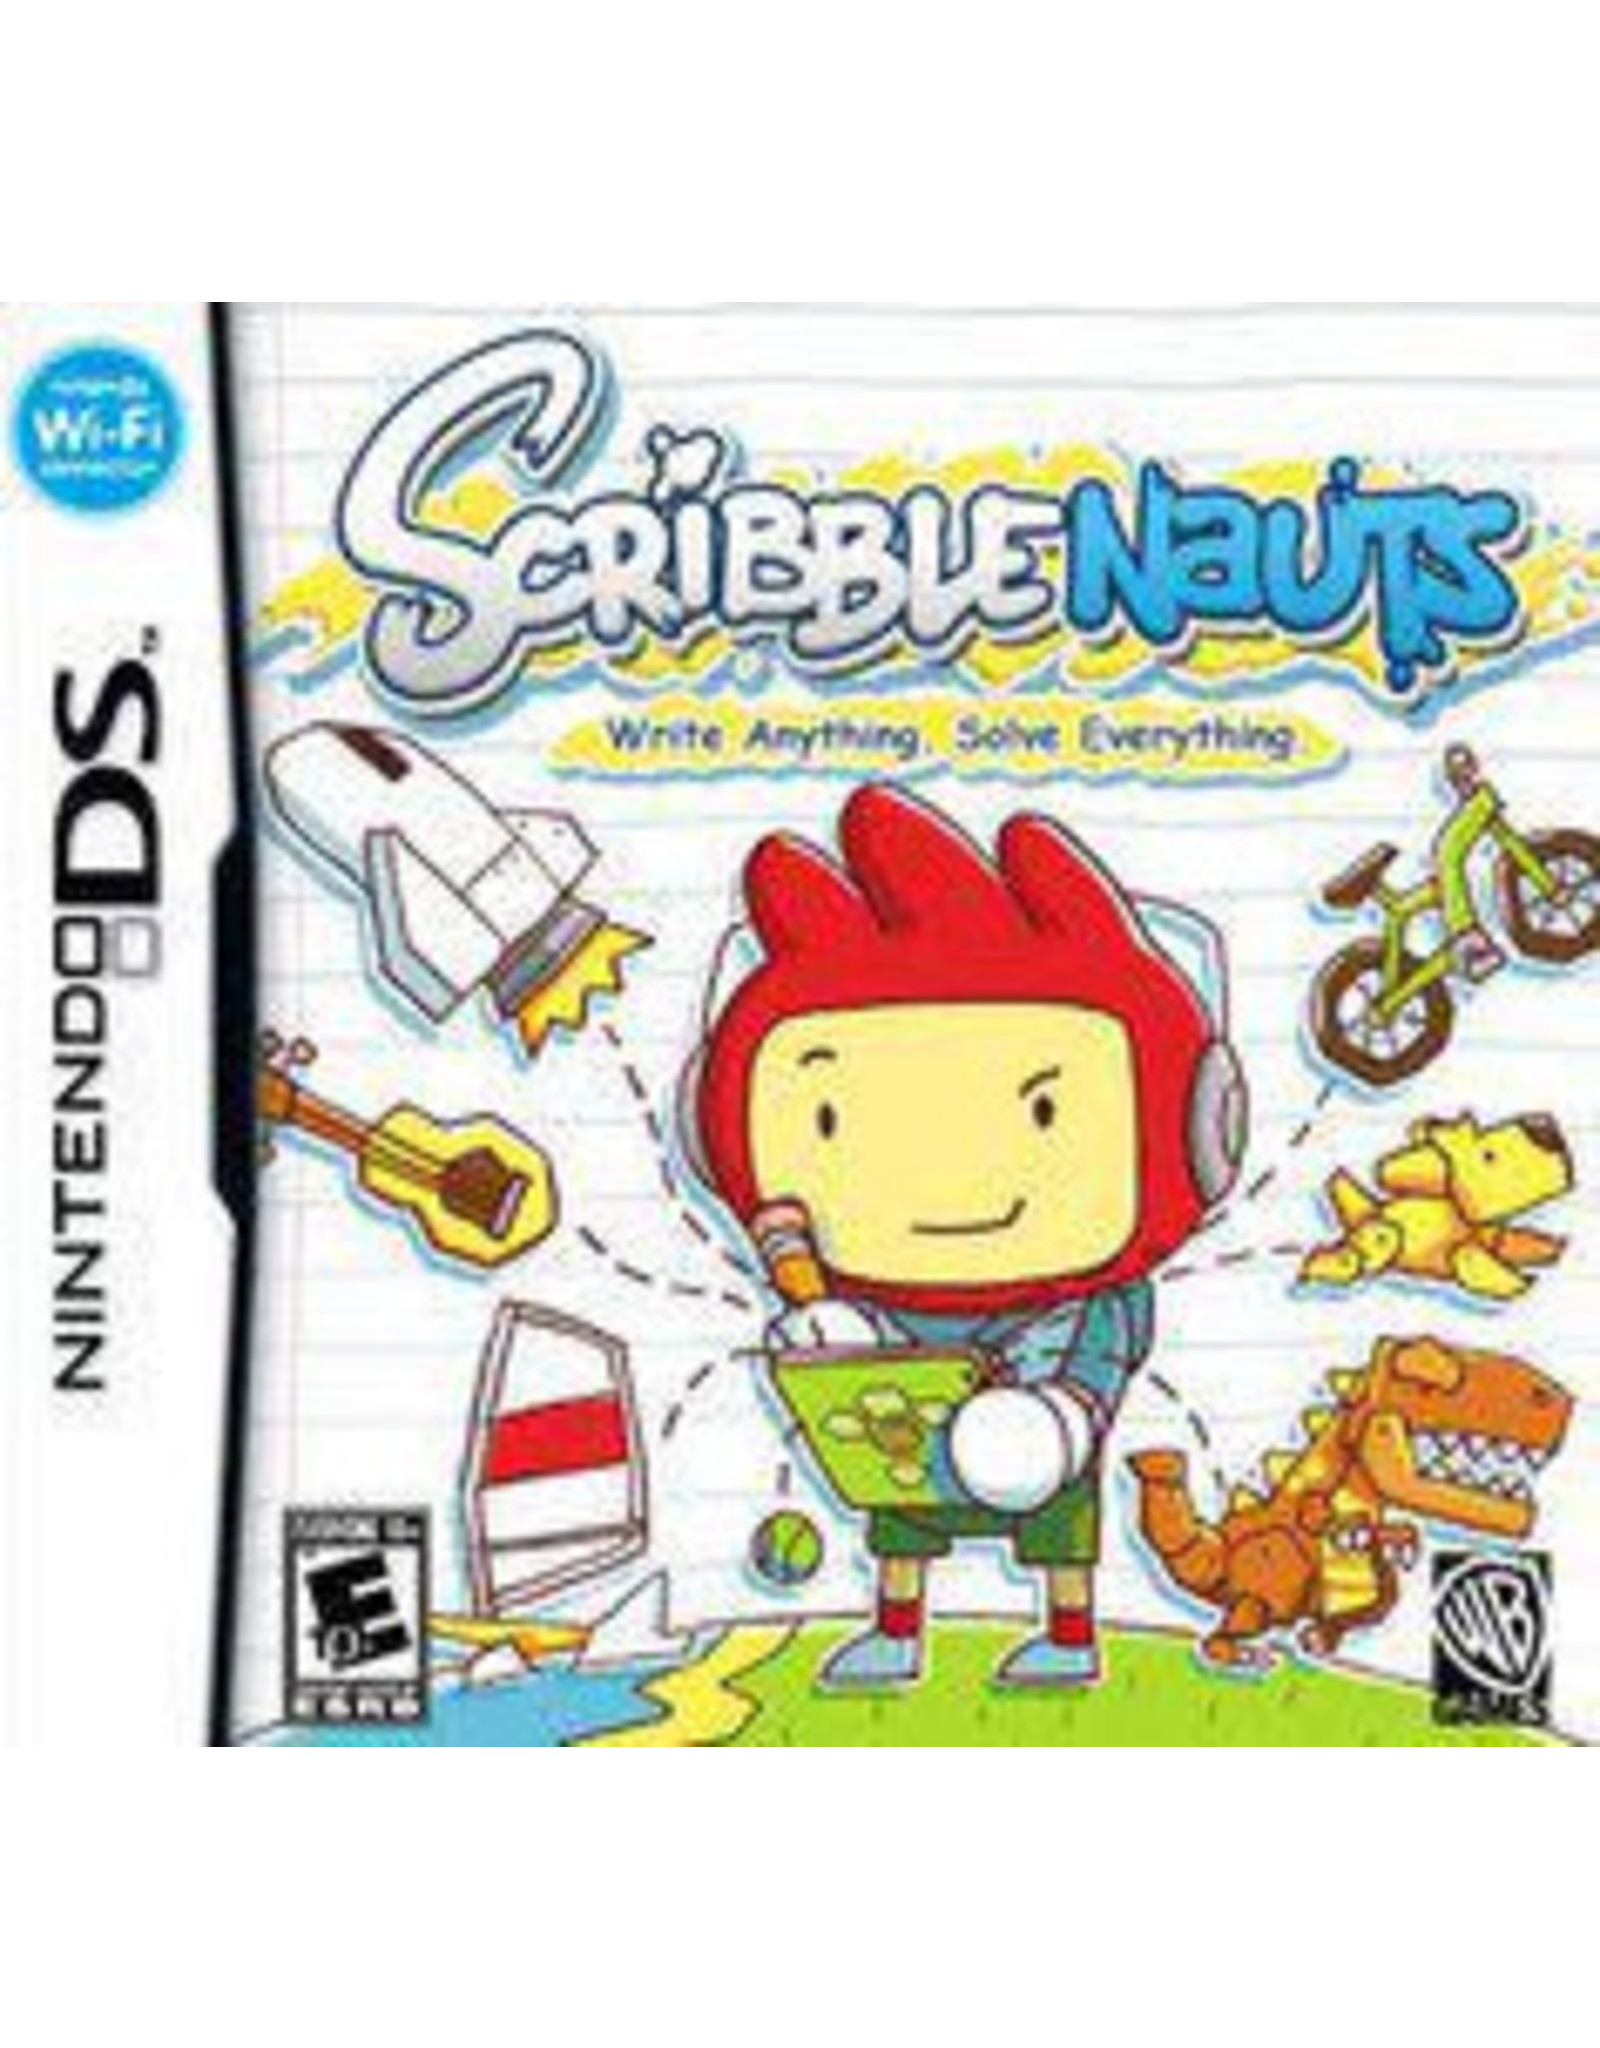 Nintendo DS Scribblenauts (CiB)